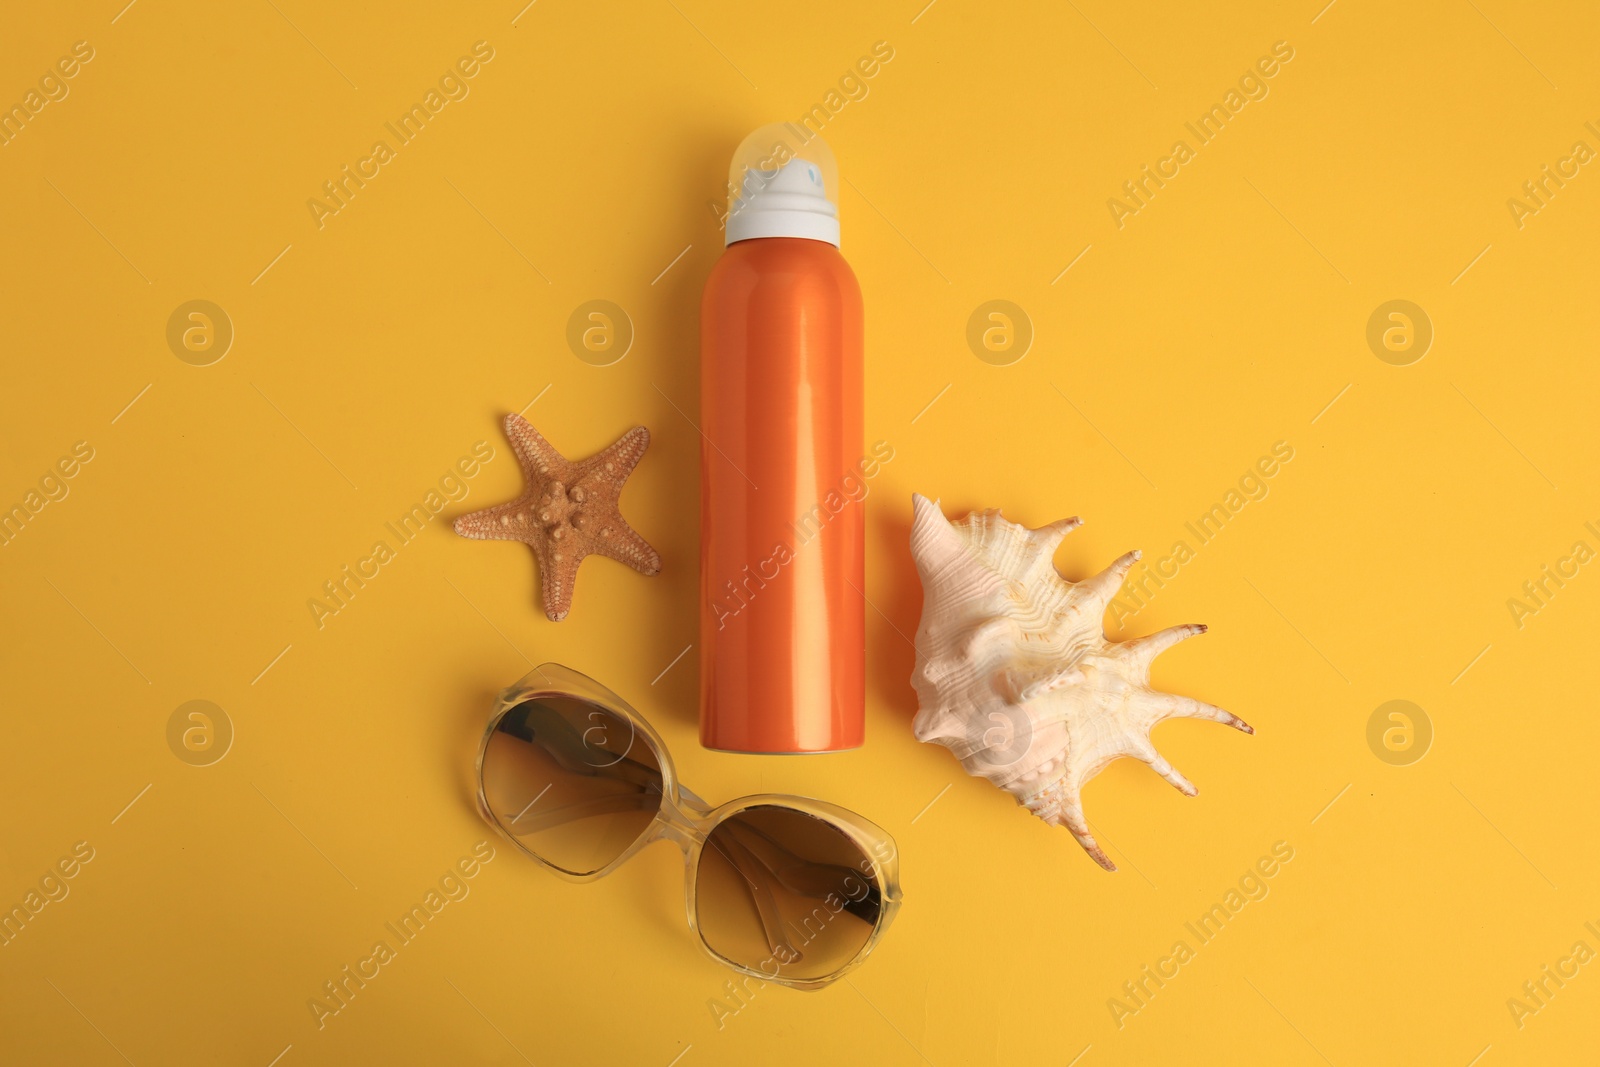 Photo of Bottle of sunscreen, starfish, seashell and sunglasses on yellow background, flat lay